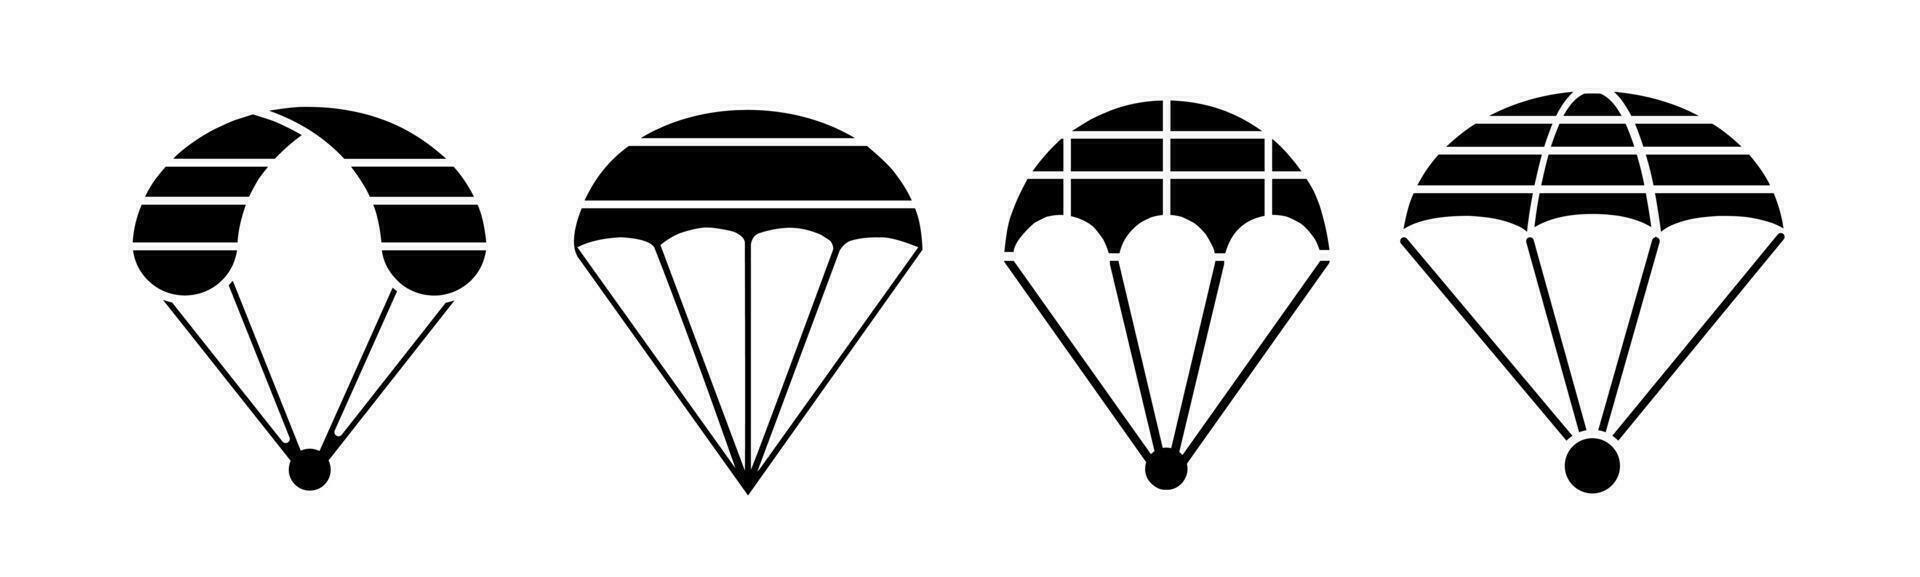 Parachute icon collection. An illustration of a black parachute icon. Stock vector. vector